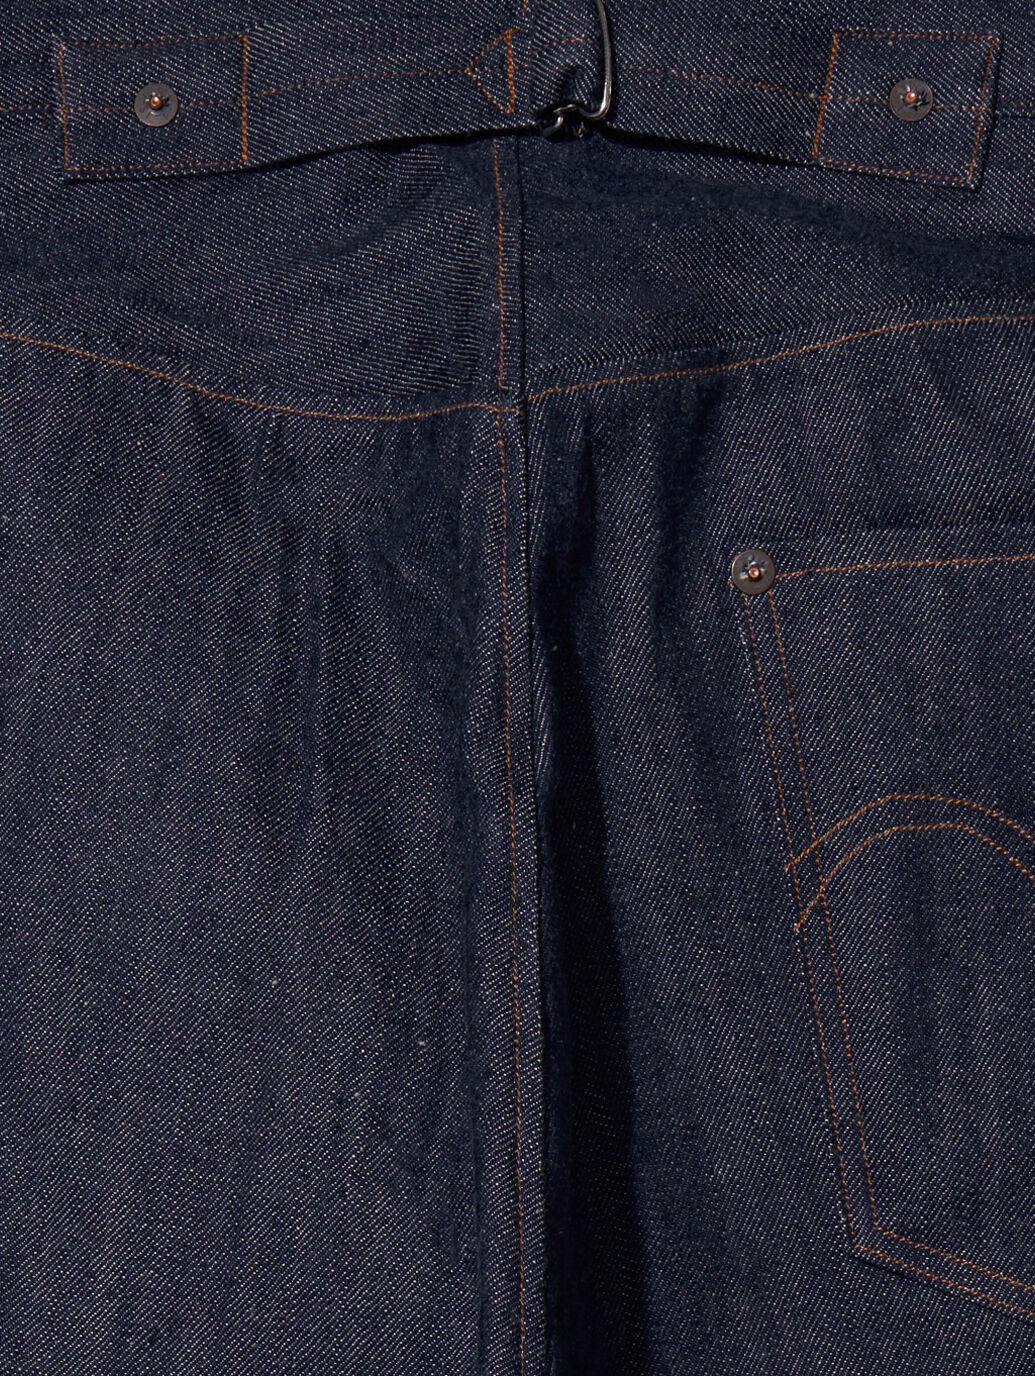 MEN'S FUDGE 11月号掲載】LEVI'S® VINTAGE CLOTHING 1890 501ジーンズ